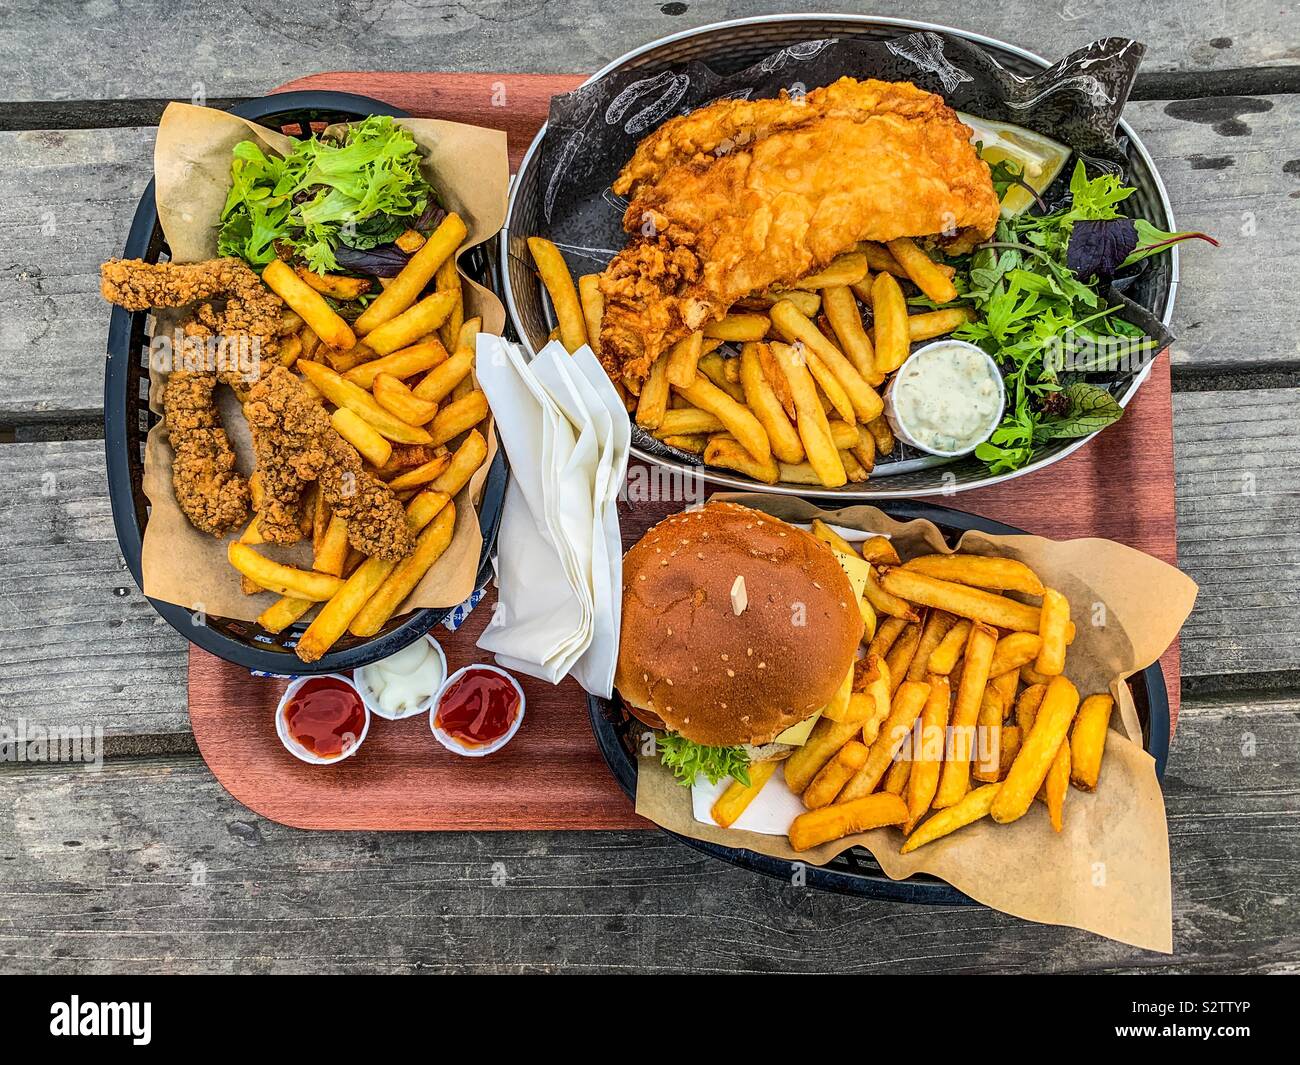 Tasty fast food Stock Photo